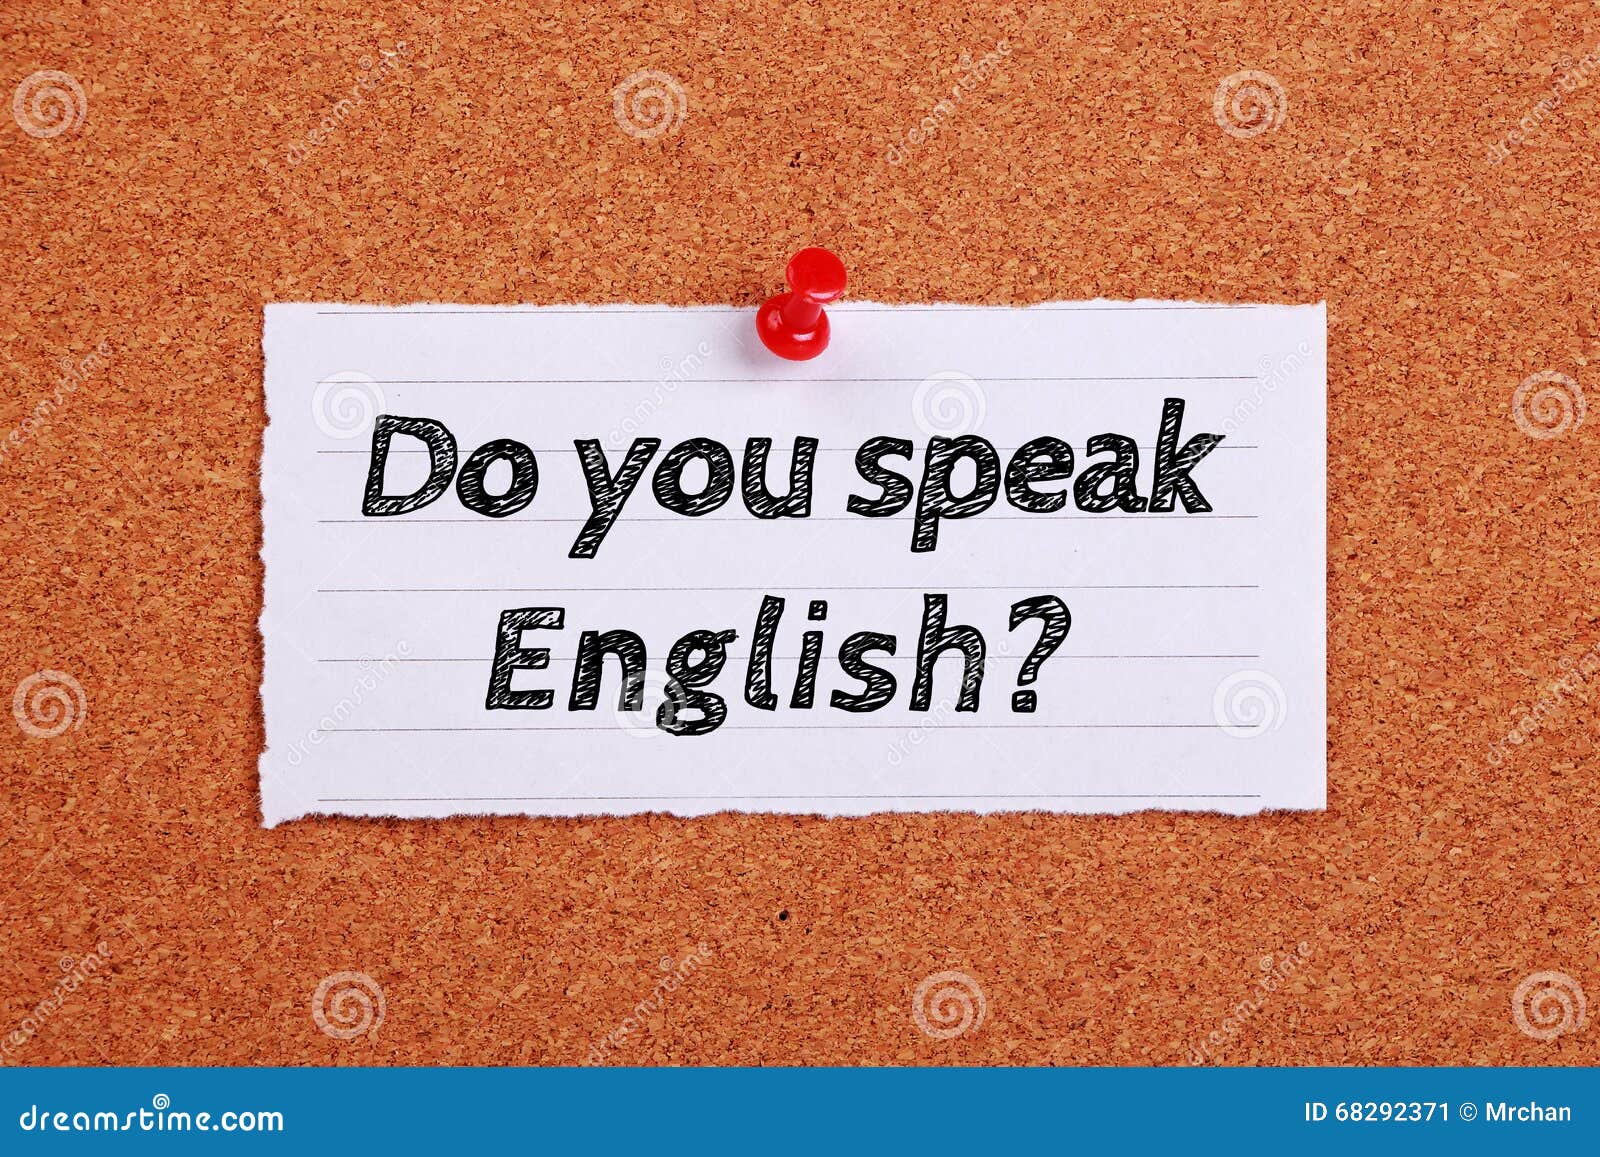 Do you speak english well. Speak English. Был you speak English. Do you speak English конечно. Do you speak English картинки.